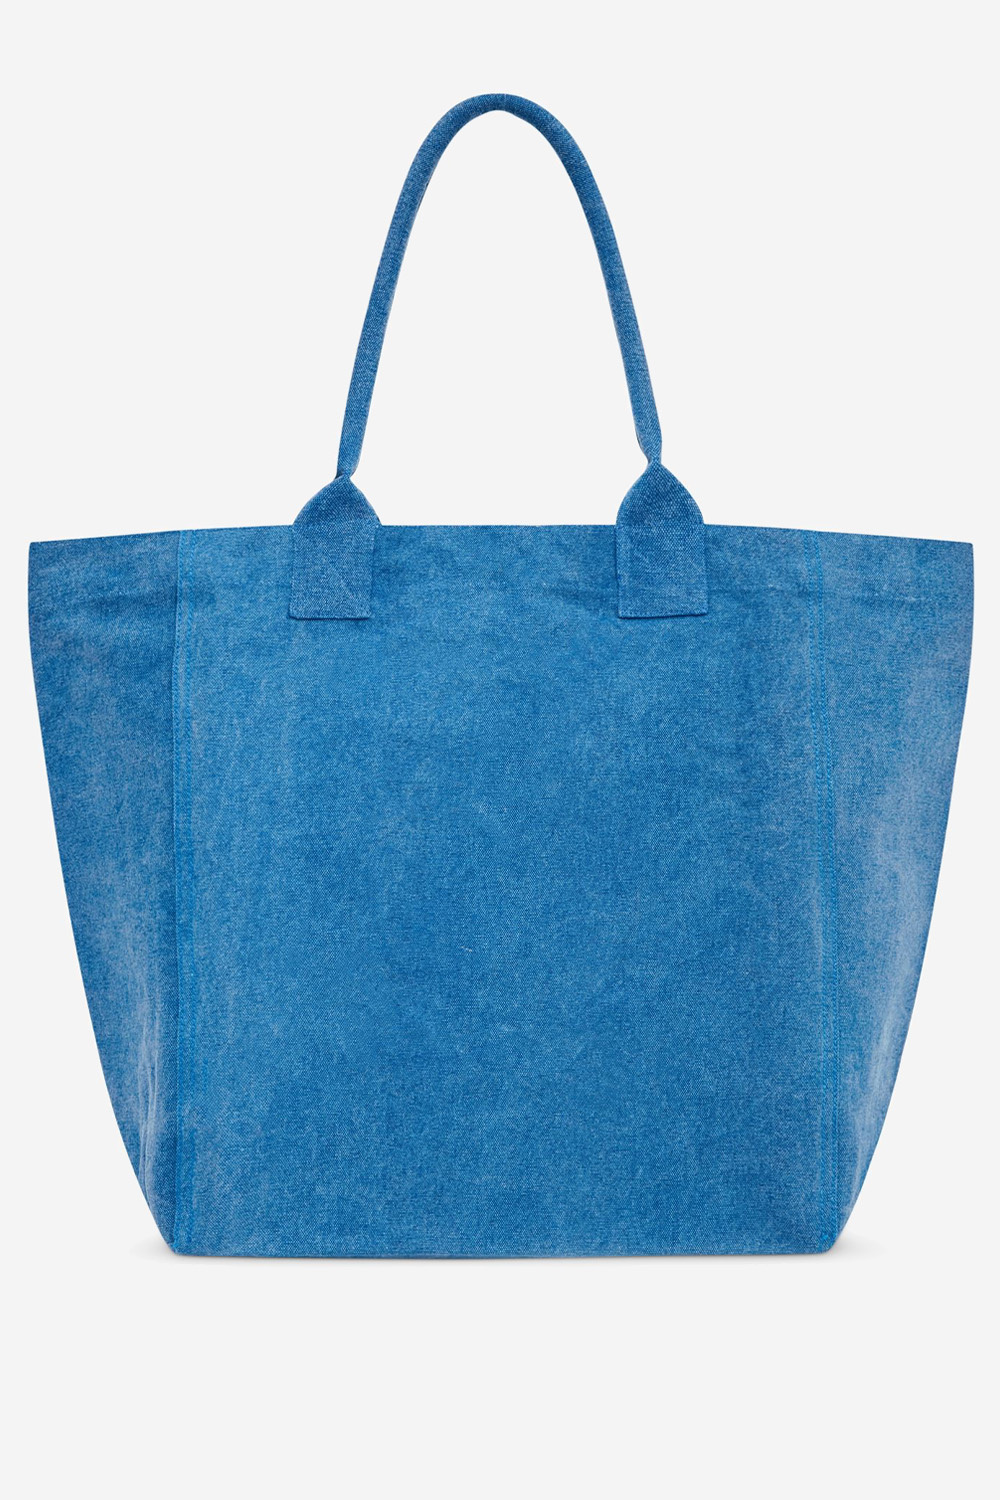 Isabel Marant Tote bag Blue